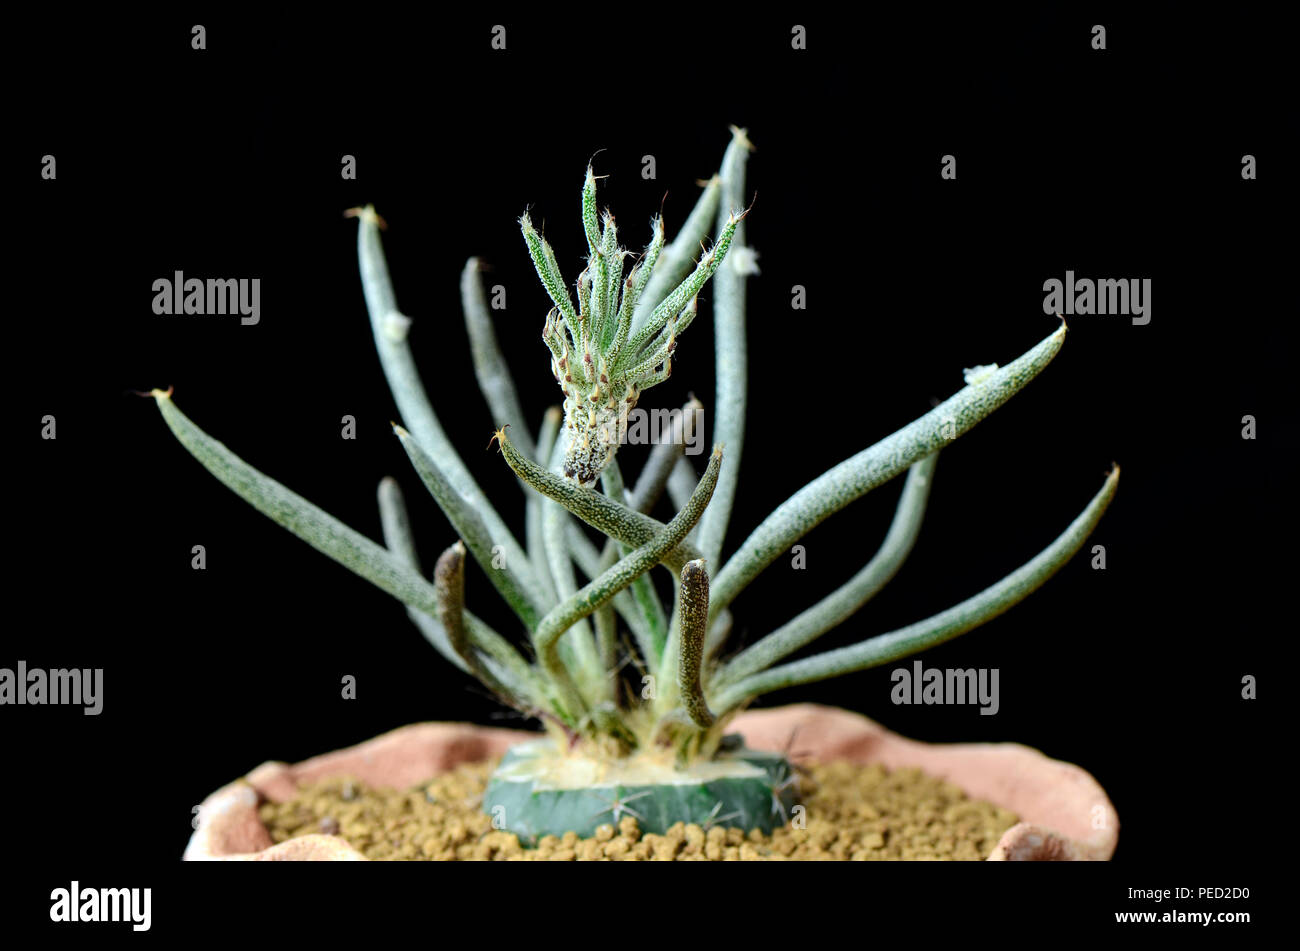 Astrophytum caput-medusae or Digitostigma caput-medusae with small bud on branch. Stock Photo